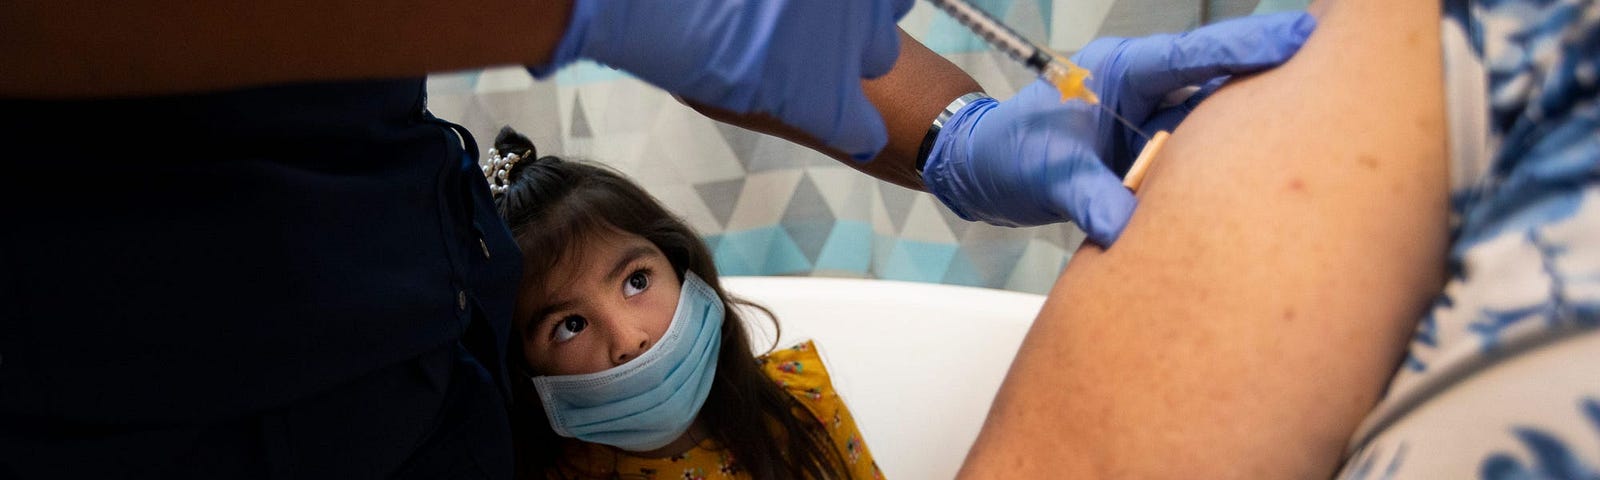 A child watches an individual receive a coronavirus vaccine.